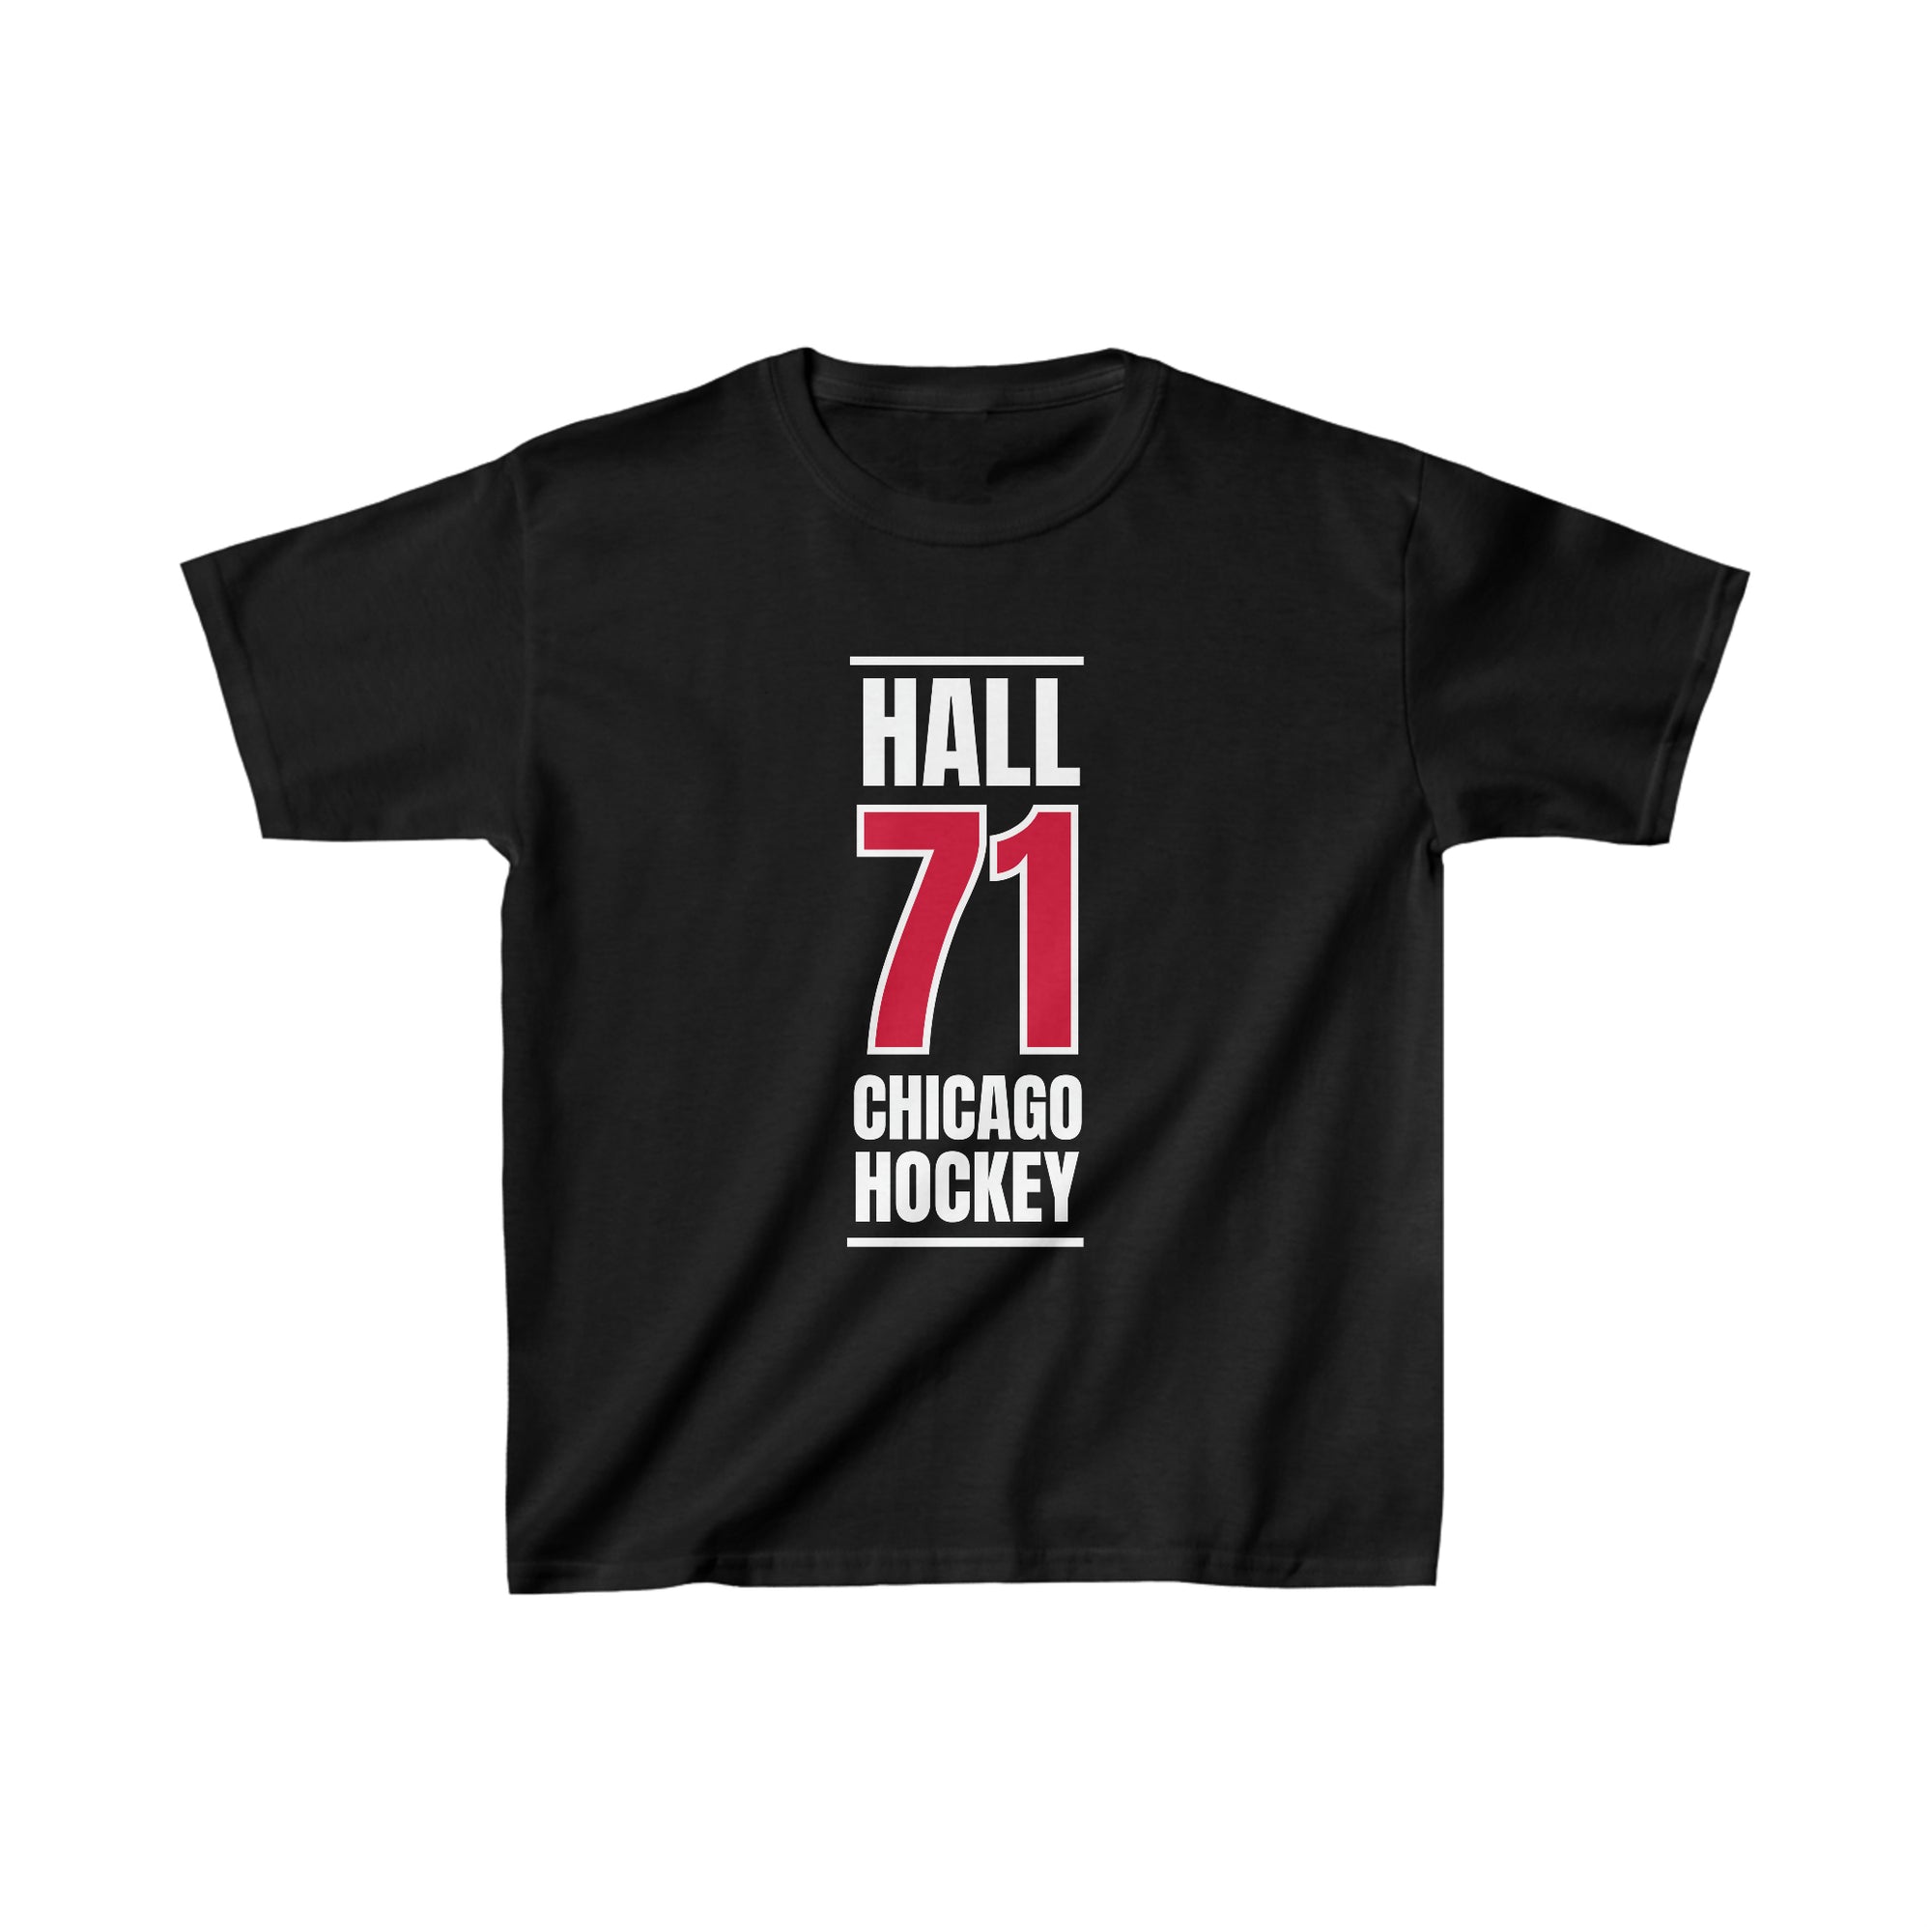 Hall 71 Chicago Hockey Red Vertical Design Kids Tee